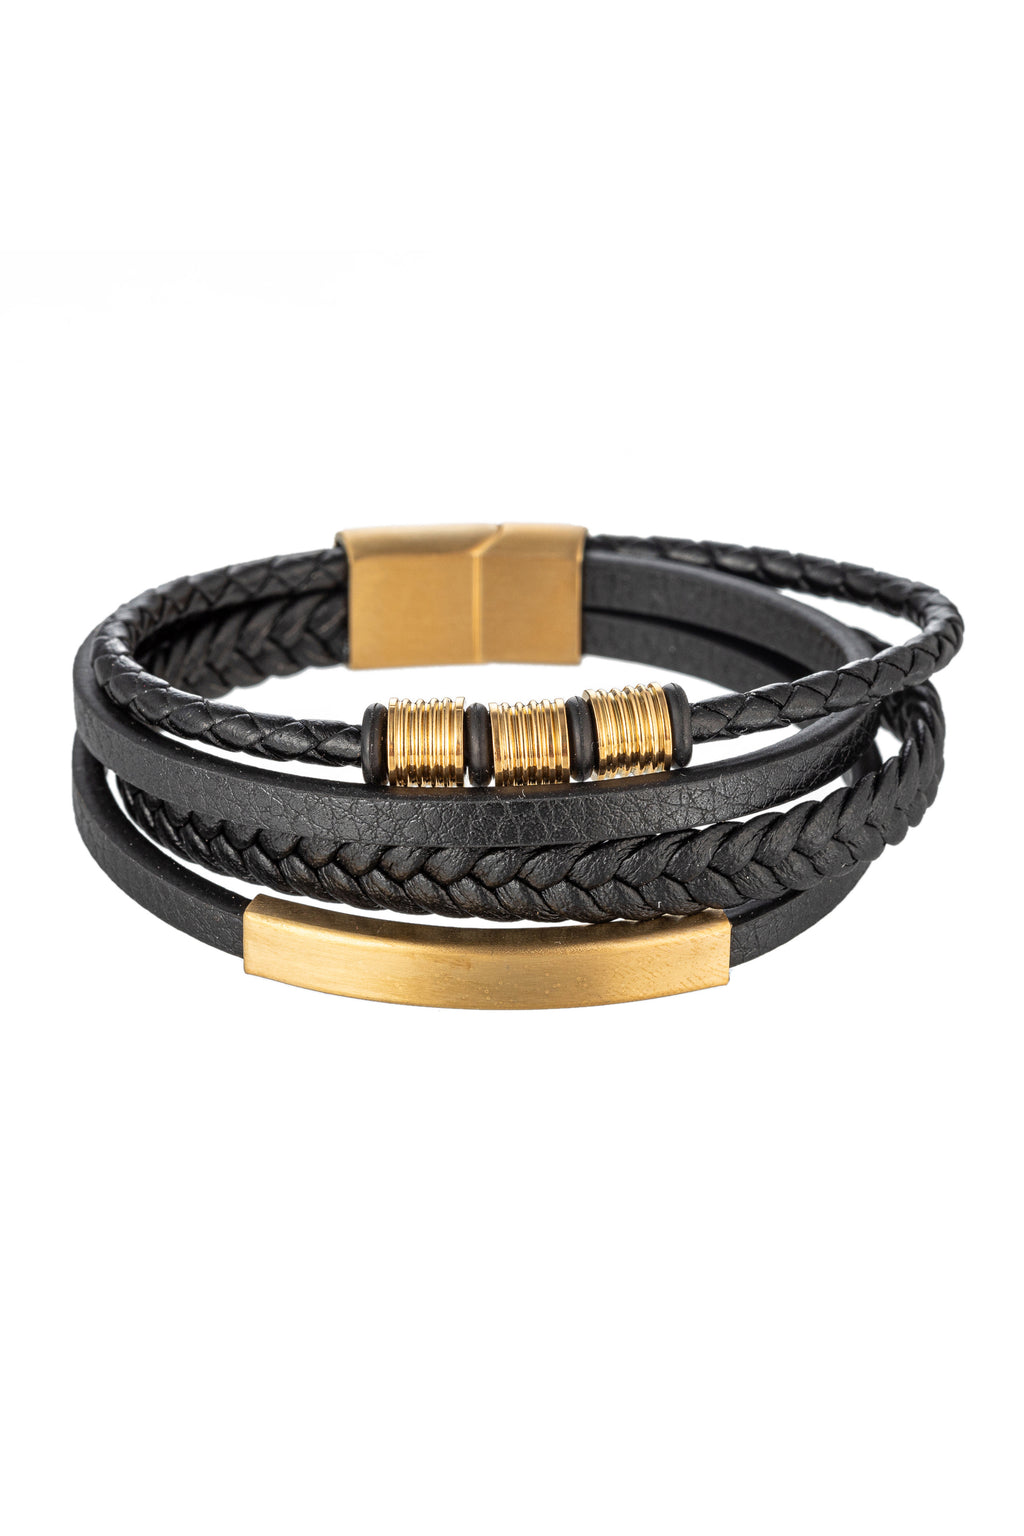 Gold tone titanium black leather band bracelet.